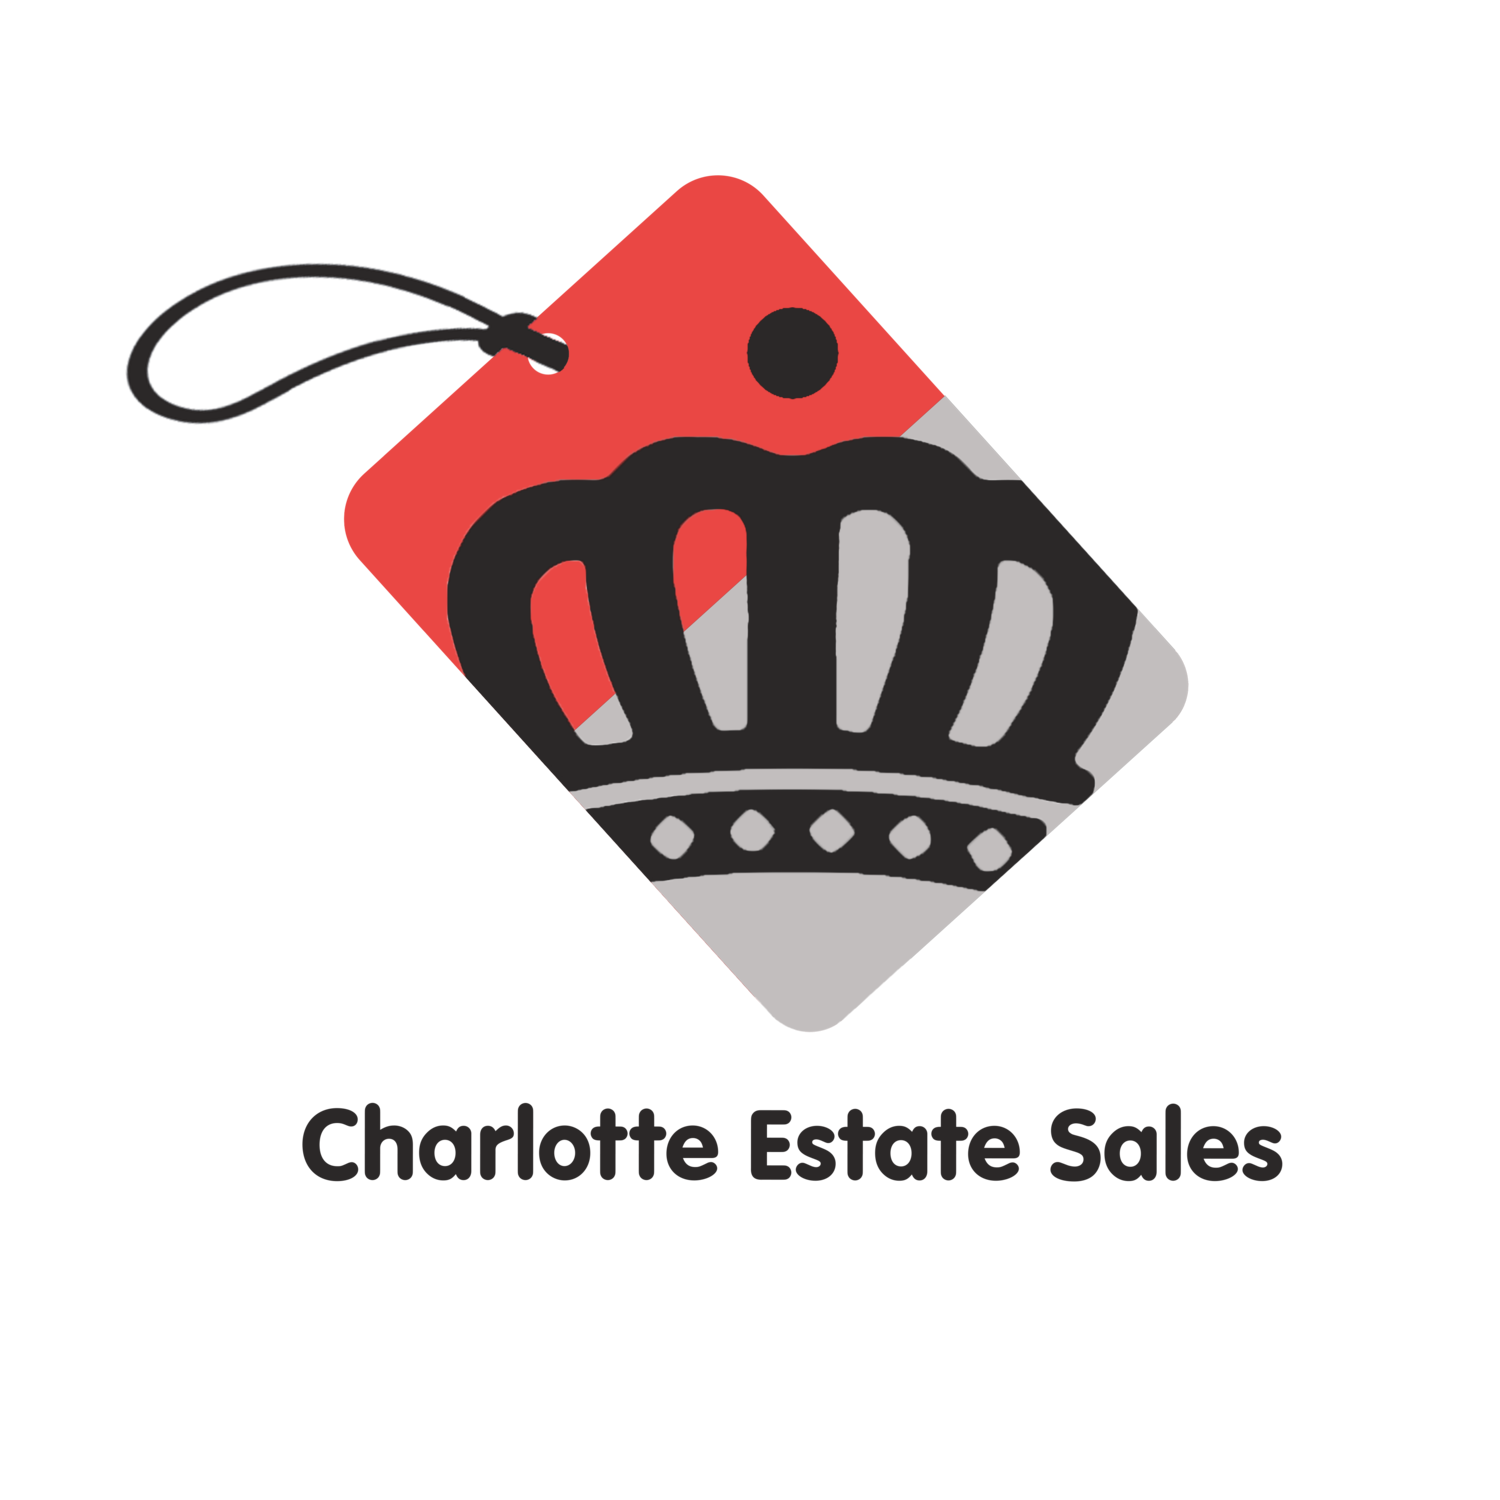 Charlotte Estate Sales